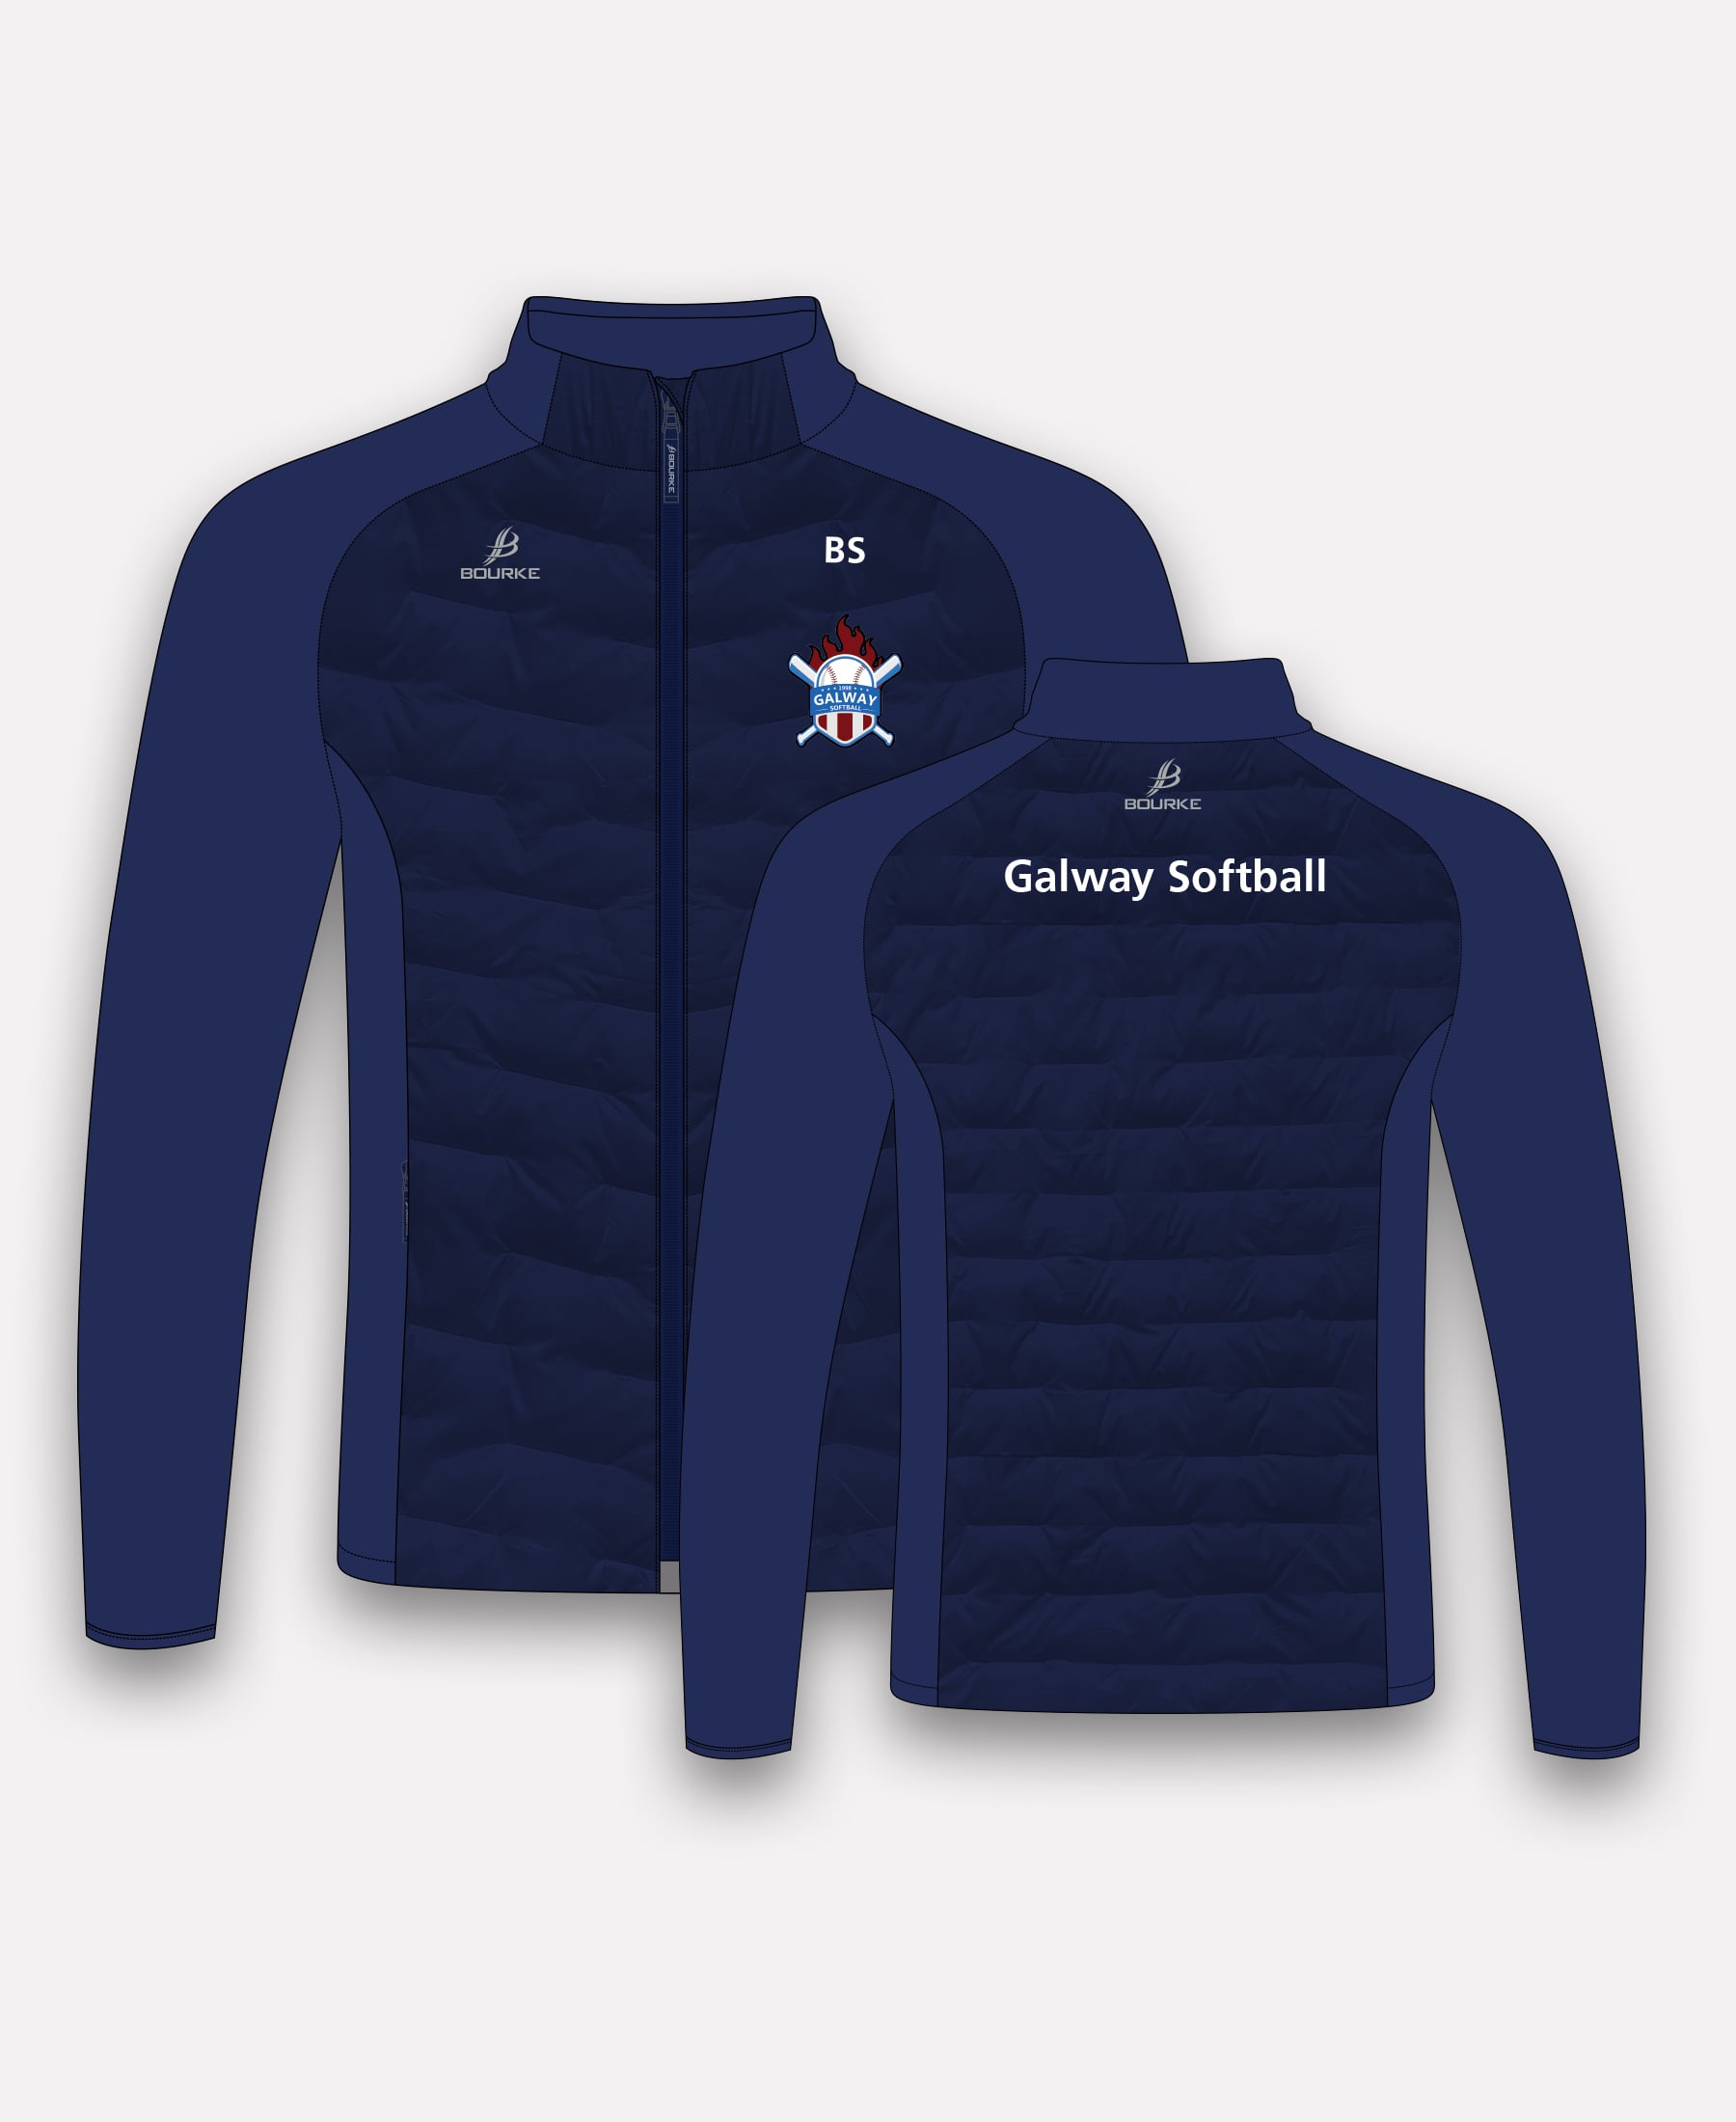 Galway Softball Croga Hybrid Jacket (Navy)